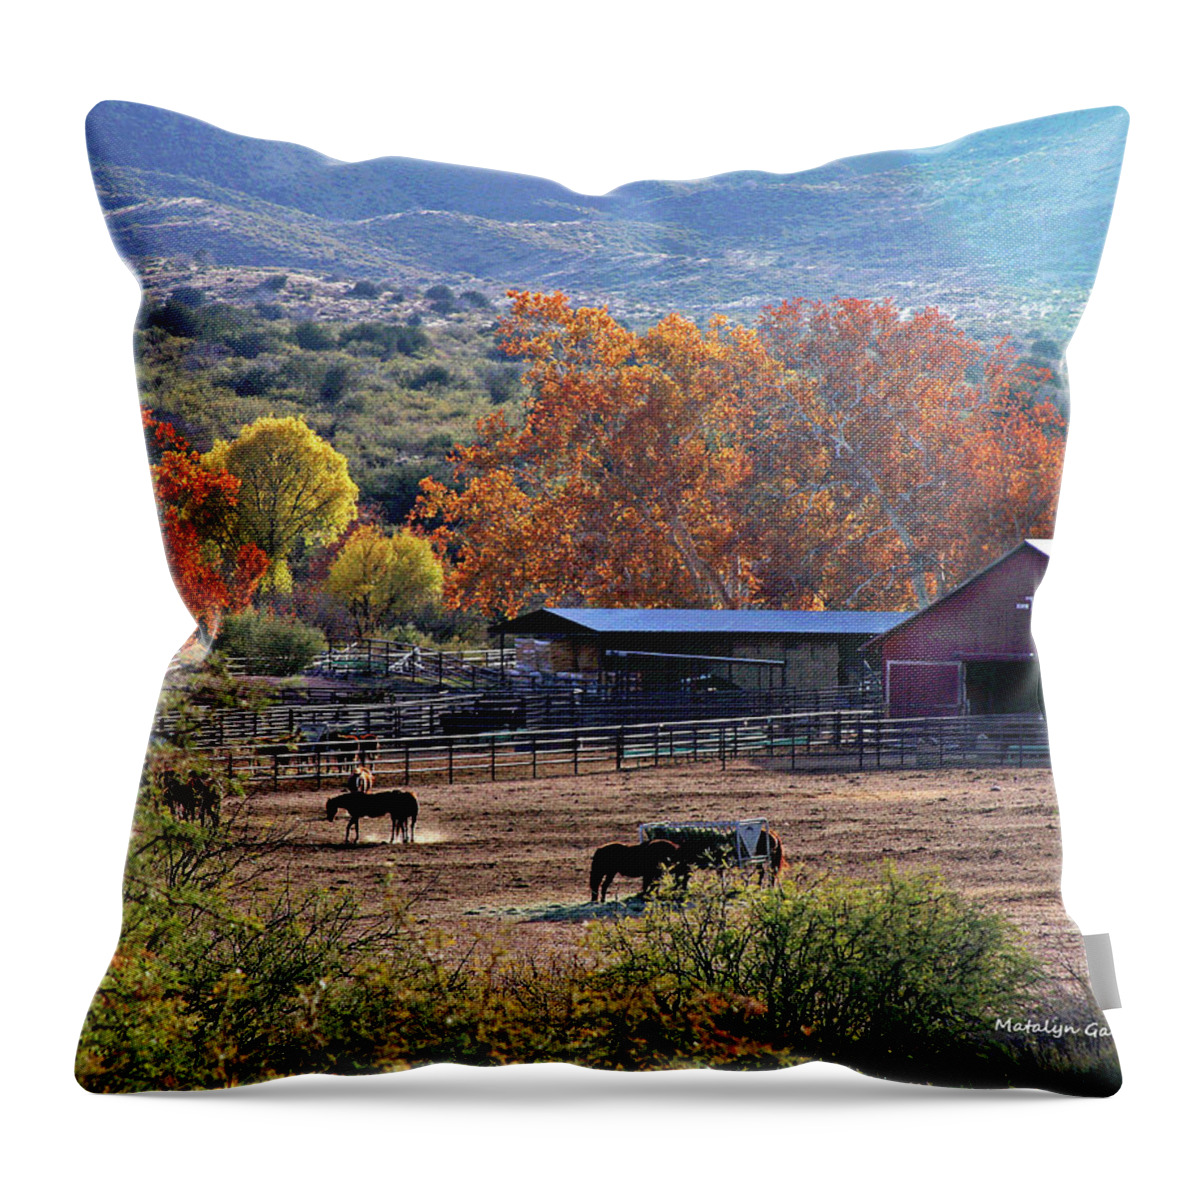 Ranch Throw Pillow featuring the photograph Autumn Ranch by Matalyn Gardner